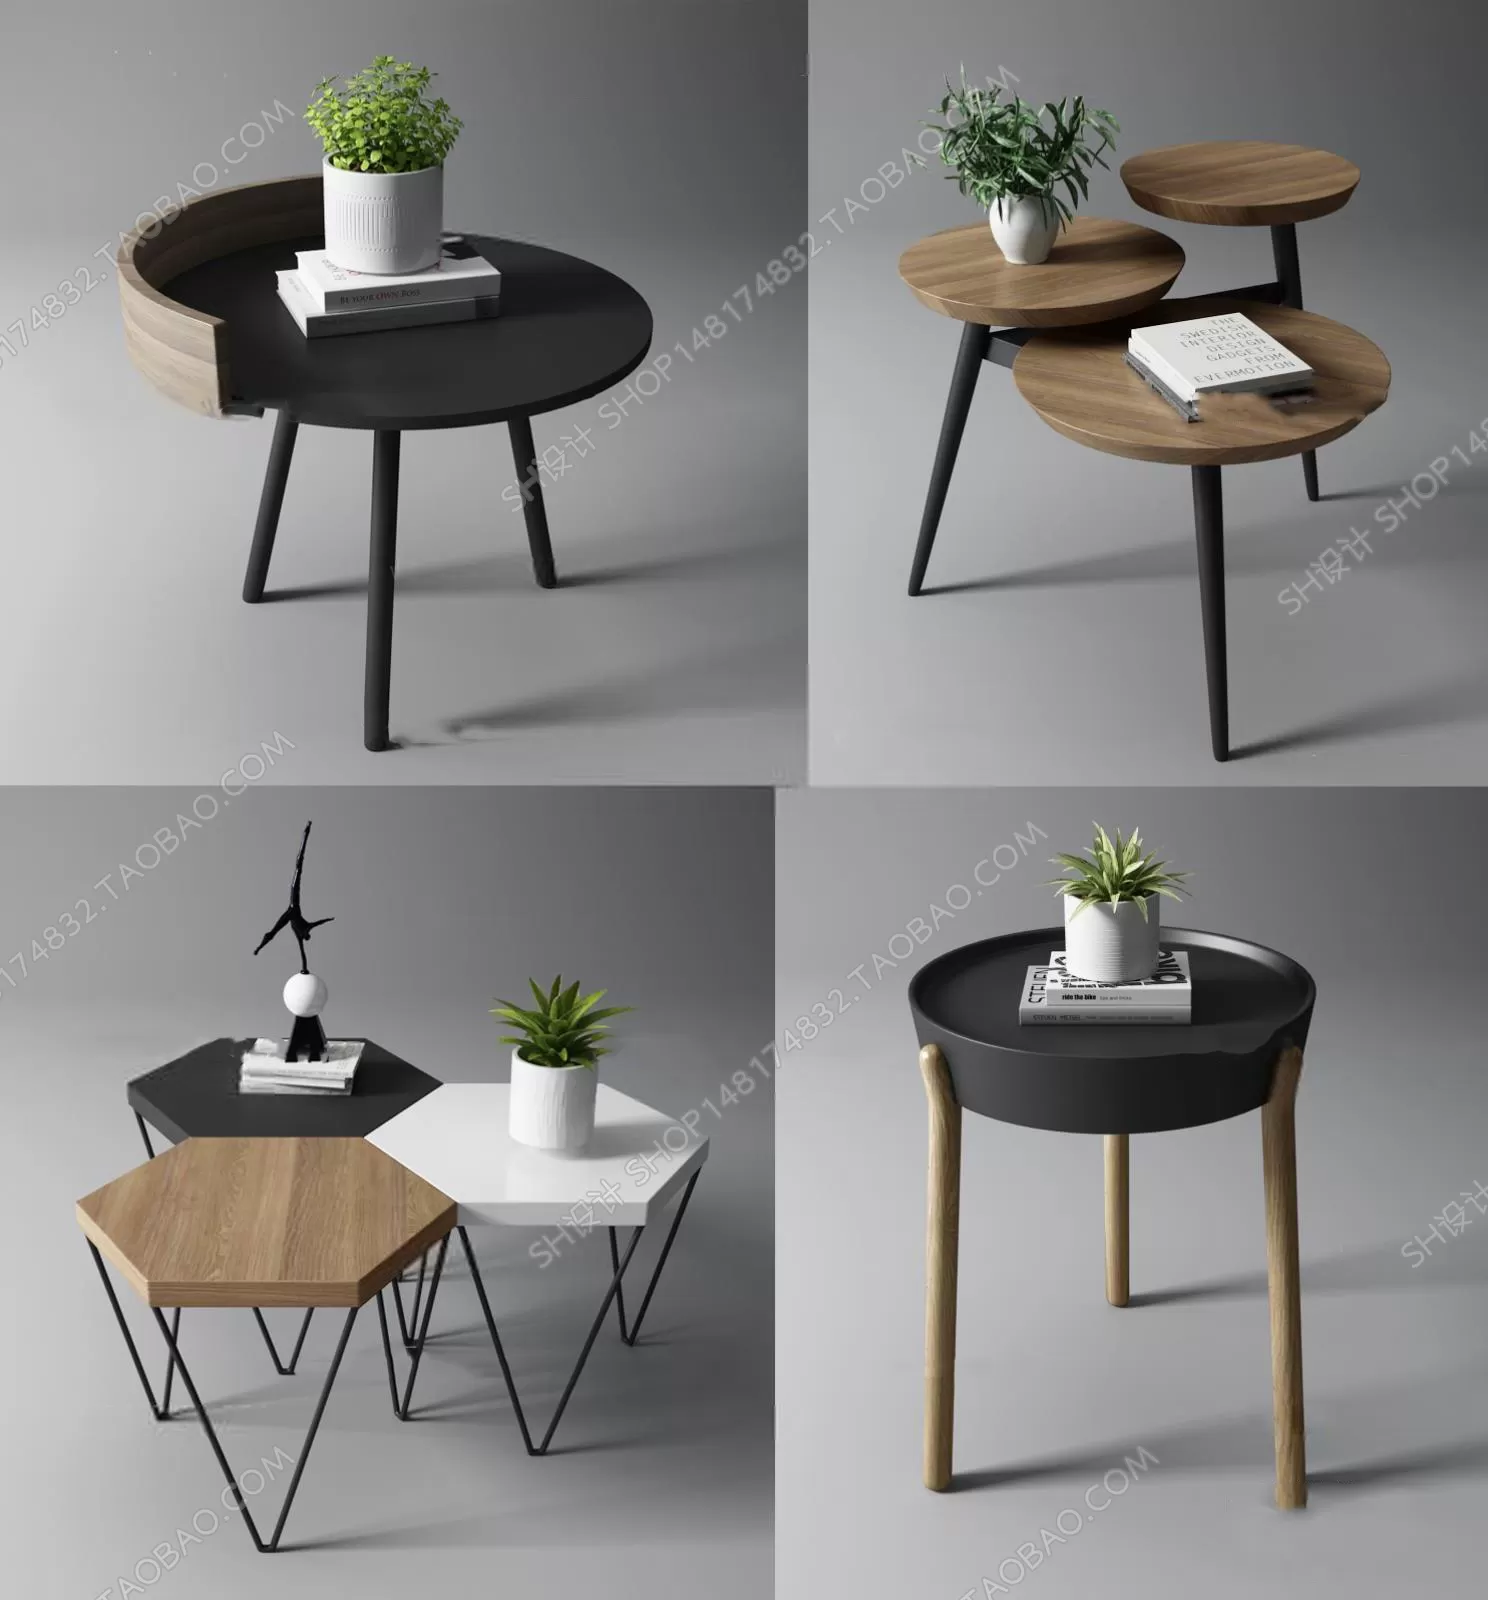 3DSKY MODELS – COFFEE TABLE 3D MODELS – 019